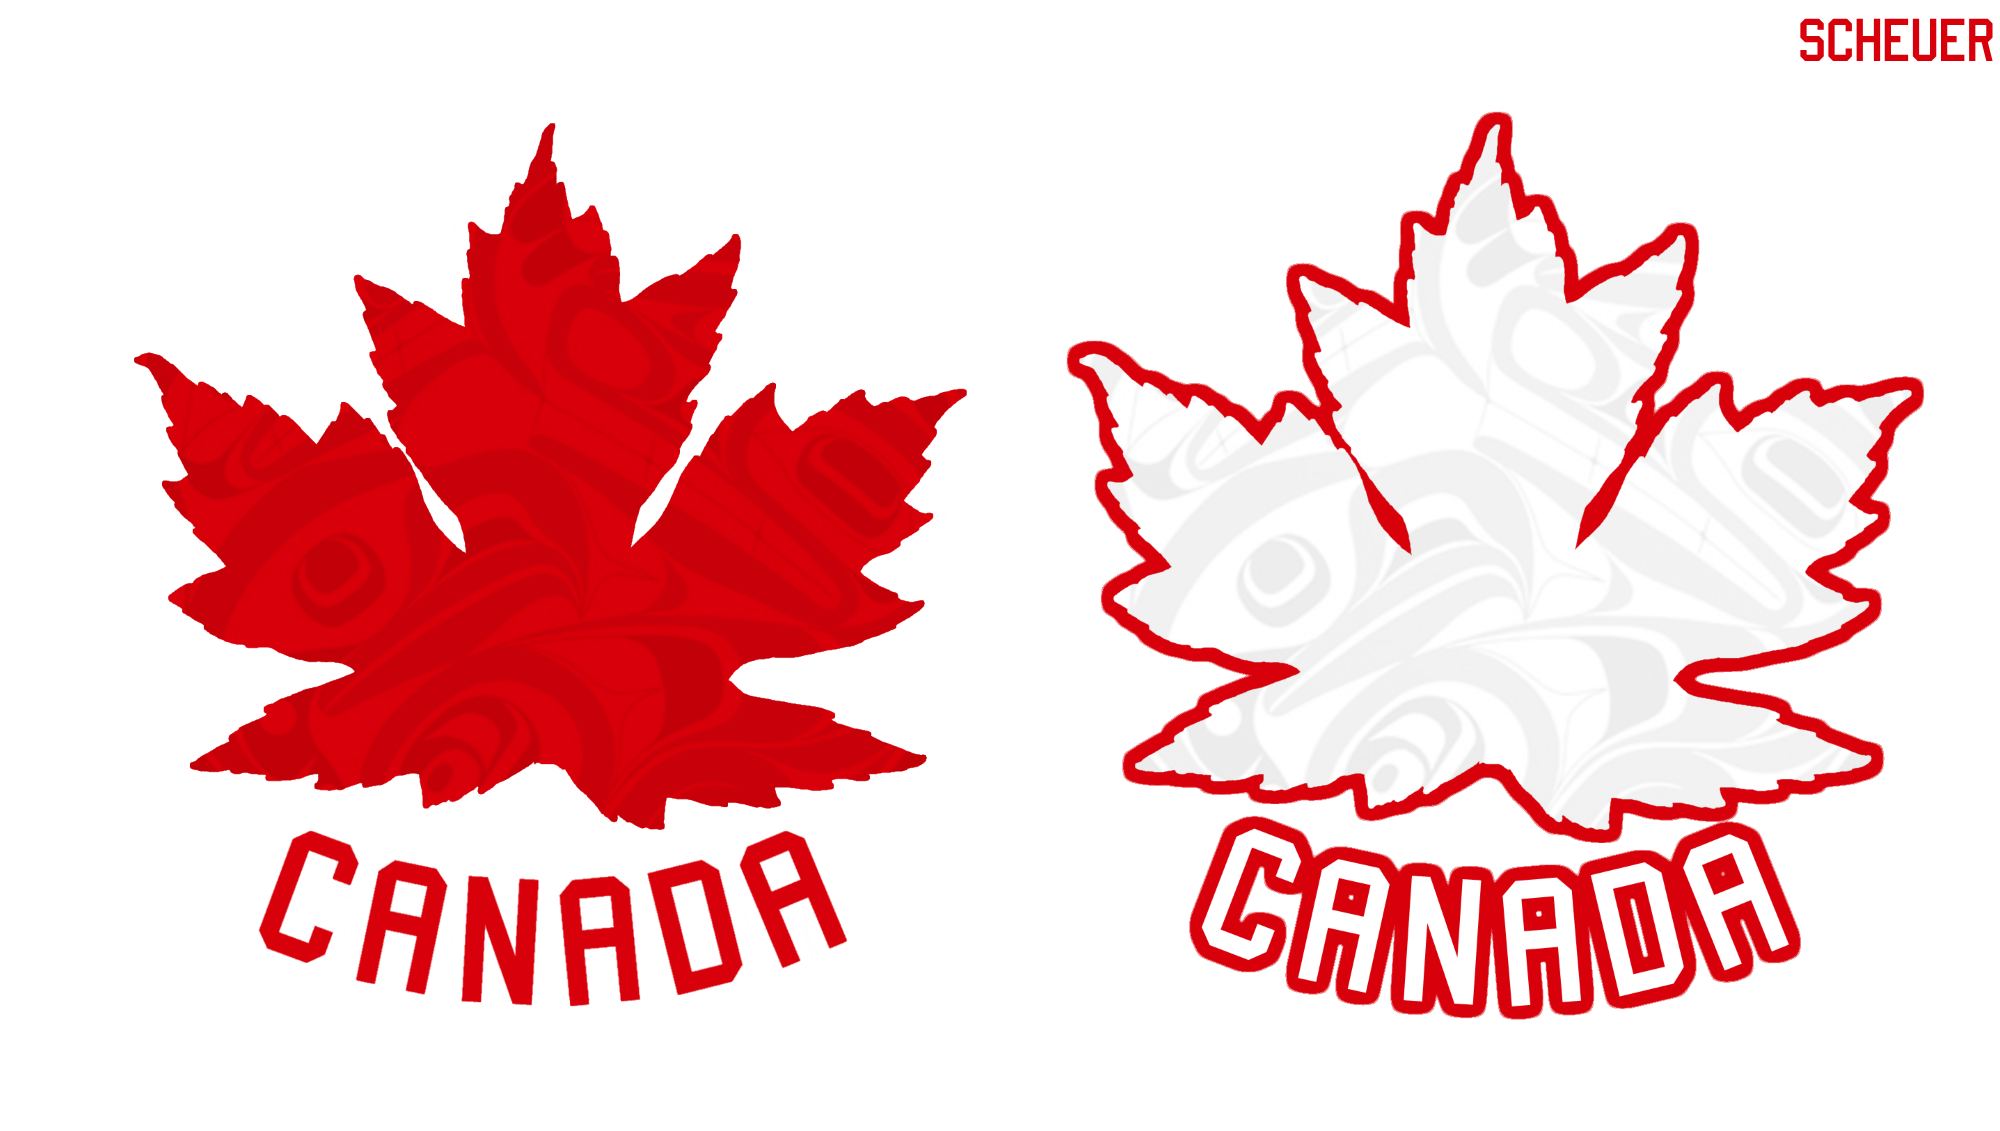 Old Maple Leaf Logo - Canada Hockey Uniform Concept by Scheuer - Concepts - Chris ...